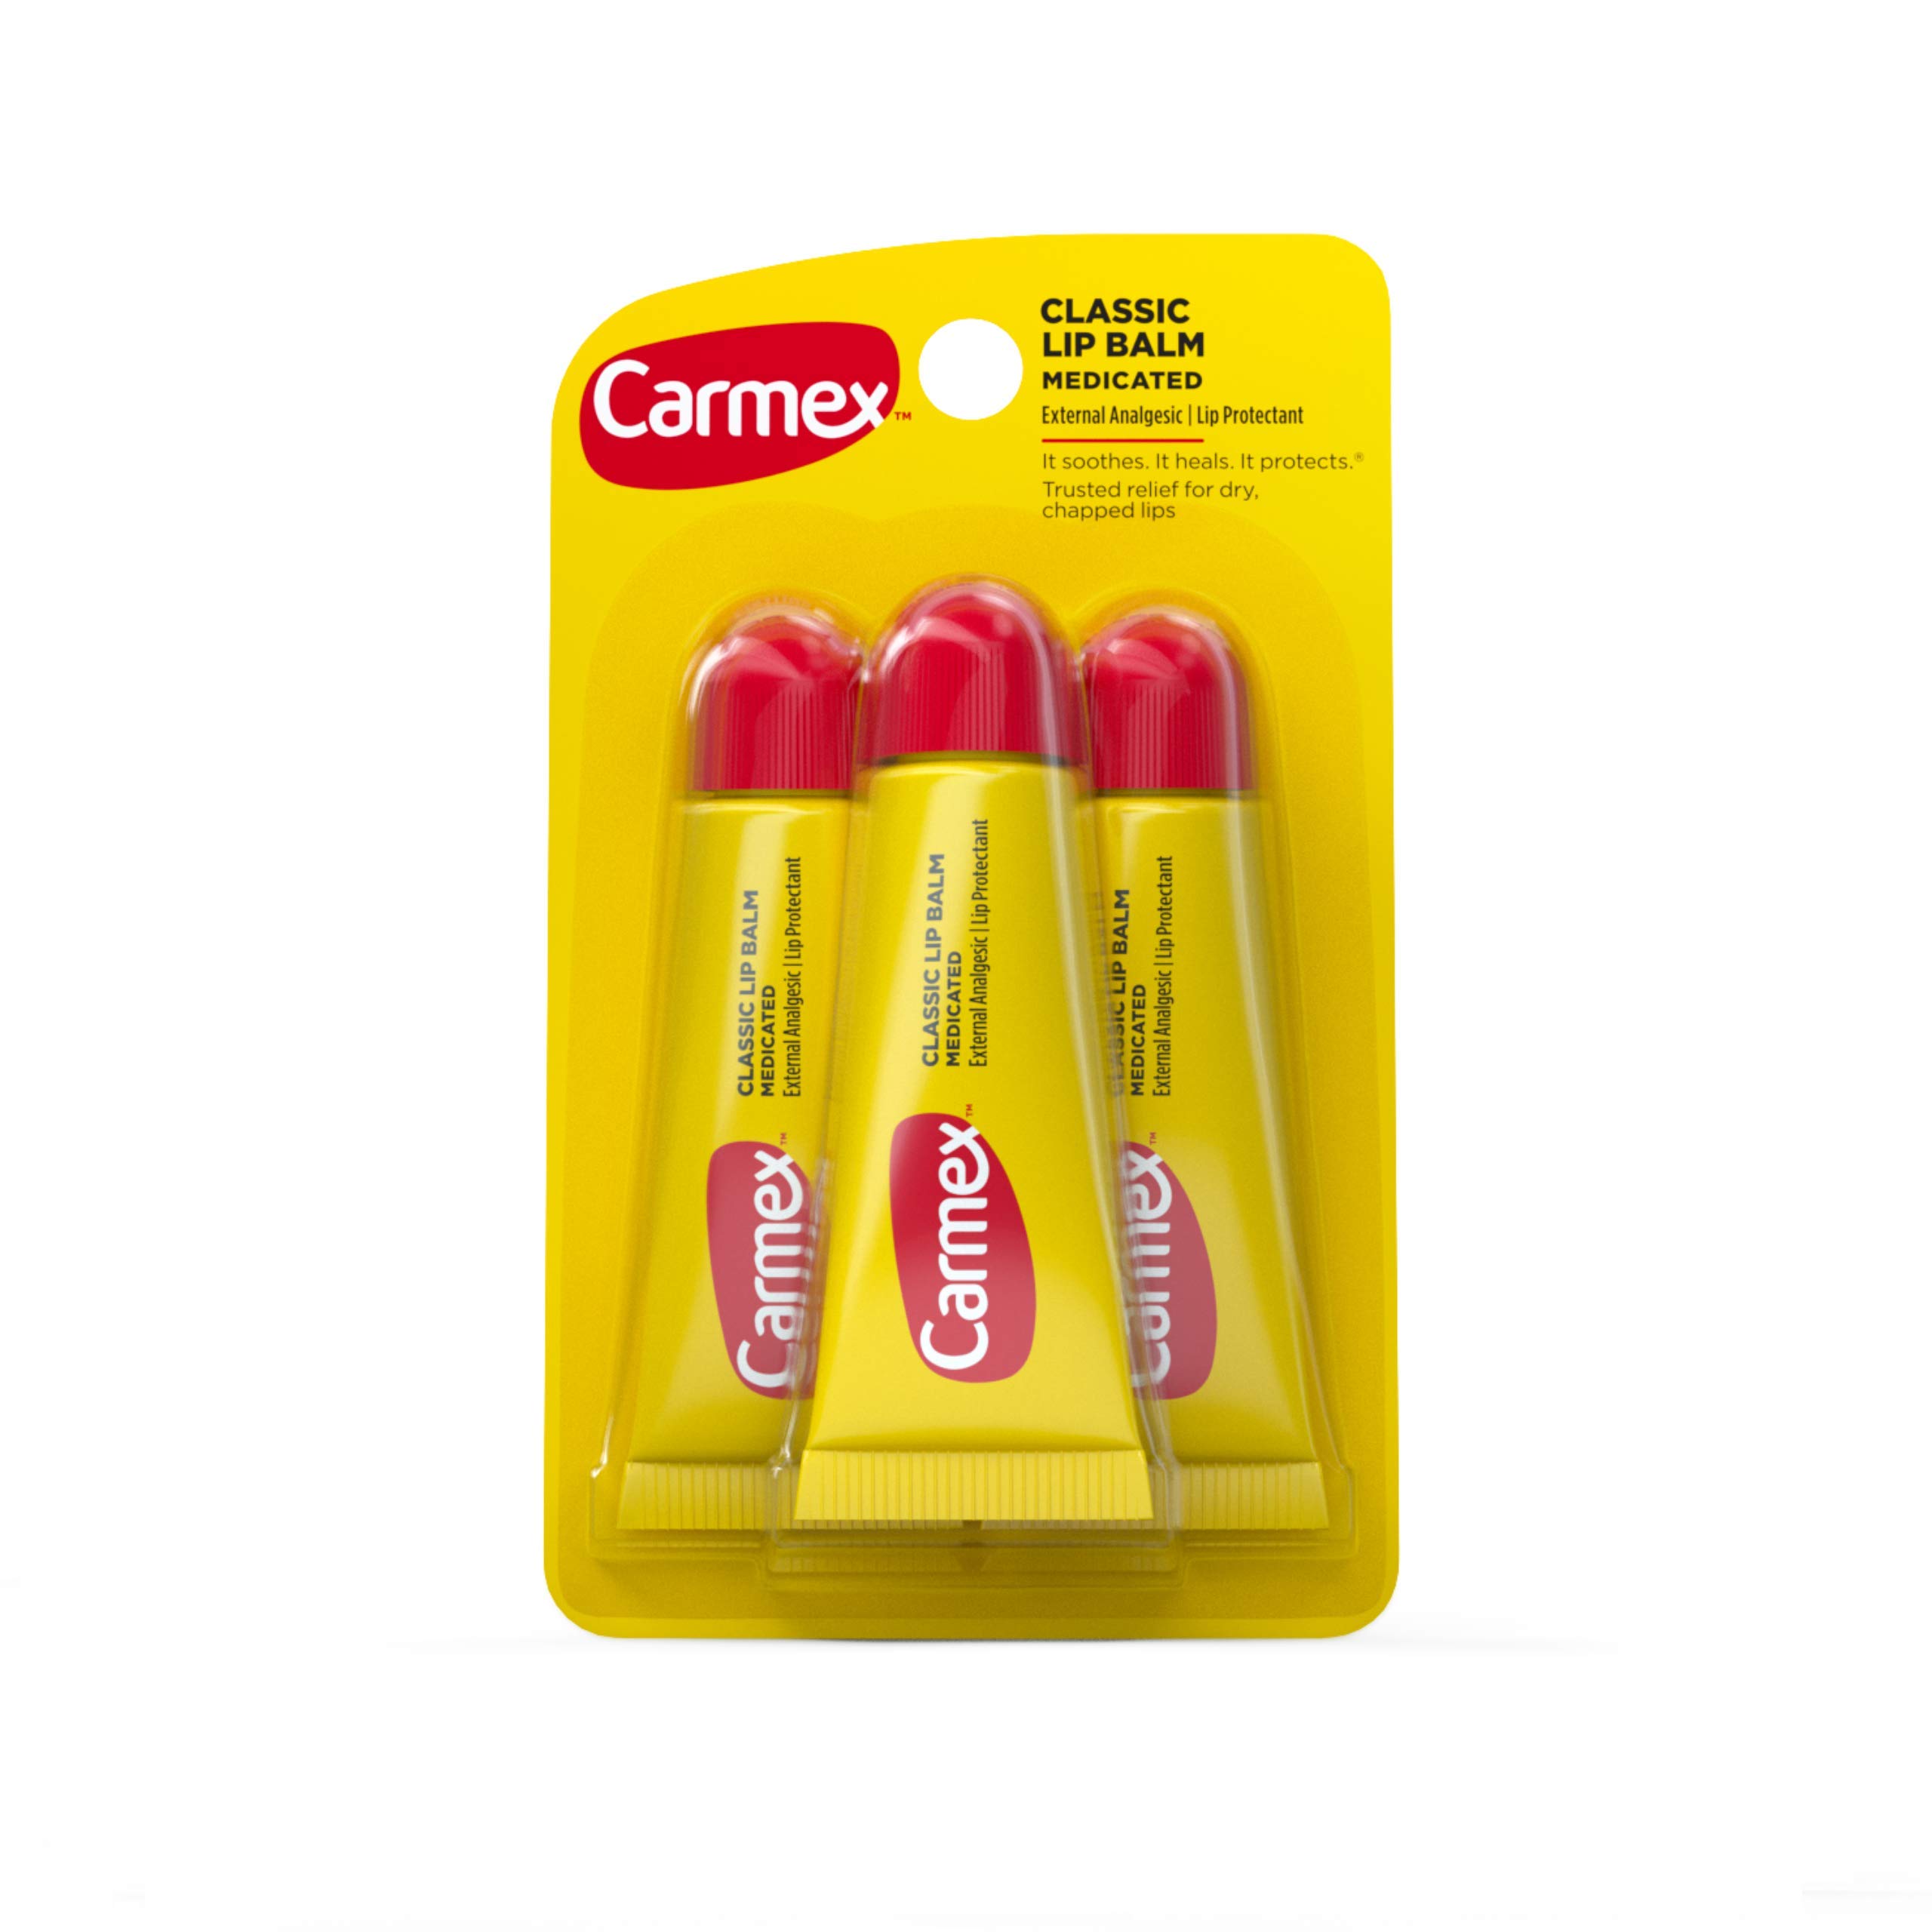 Carmex Original Flavor Moisturizing Lip Balm Tube Value Pack,0.35 Ounce (3 Count)